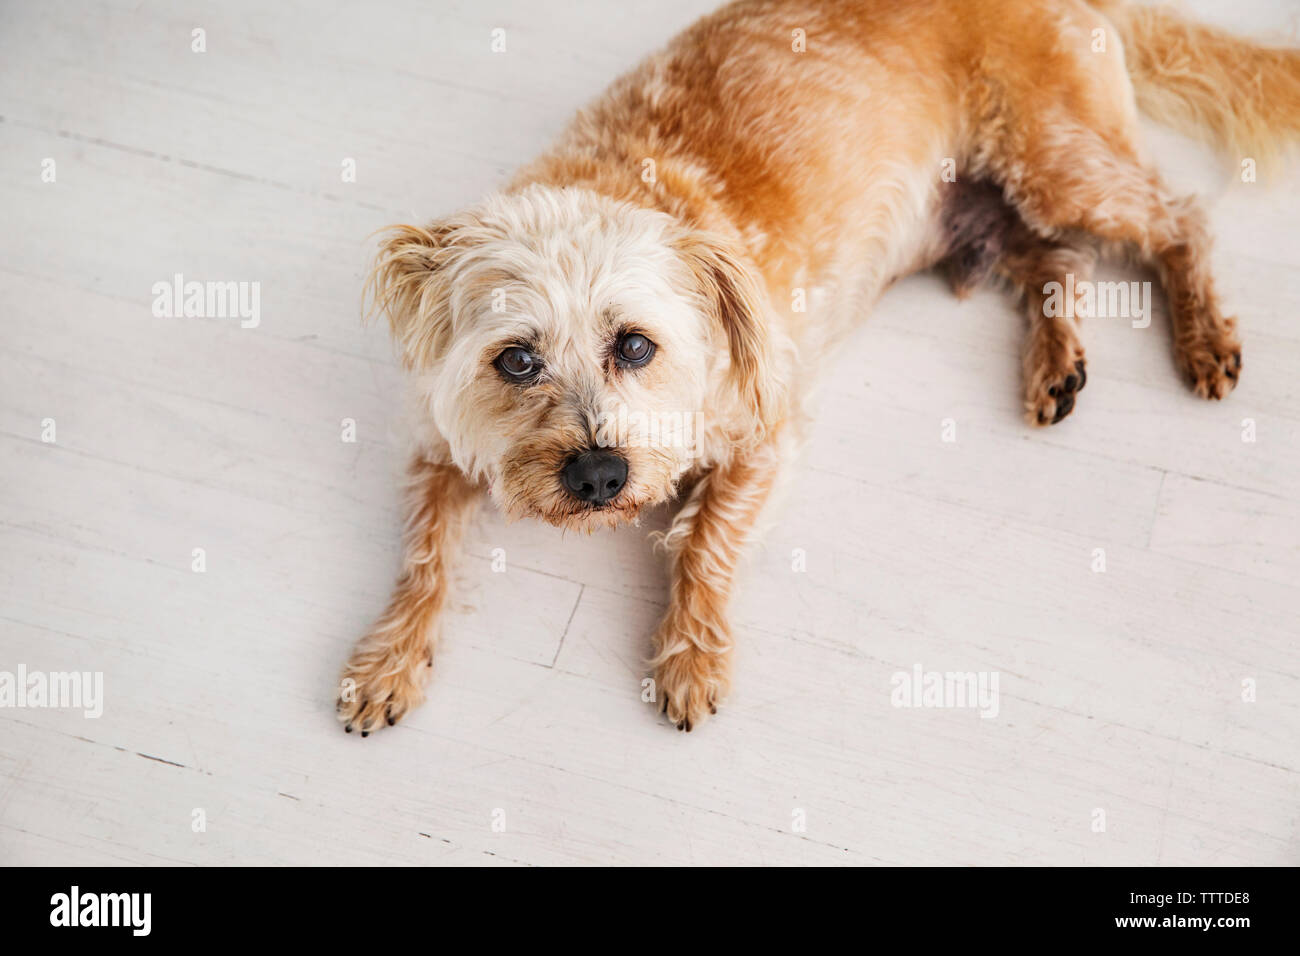 Overhead portrait of dog sitting on floor Stock Photo